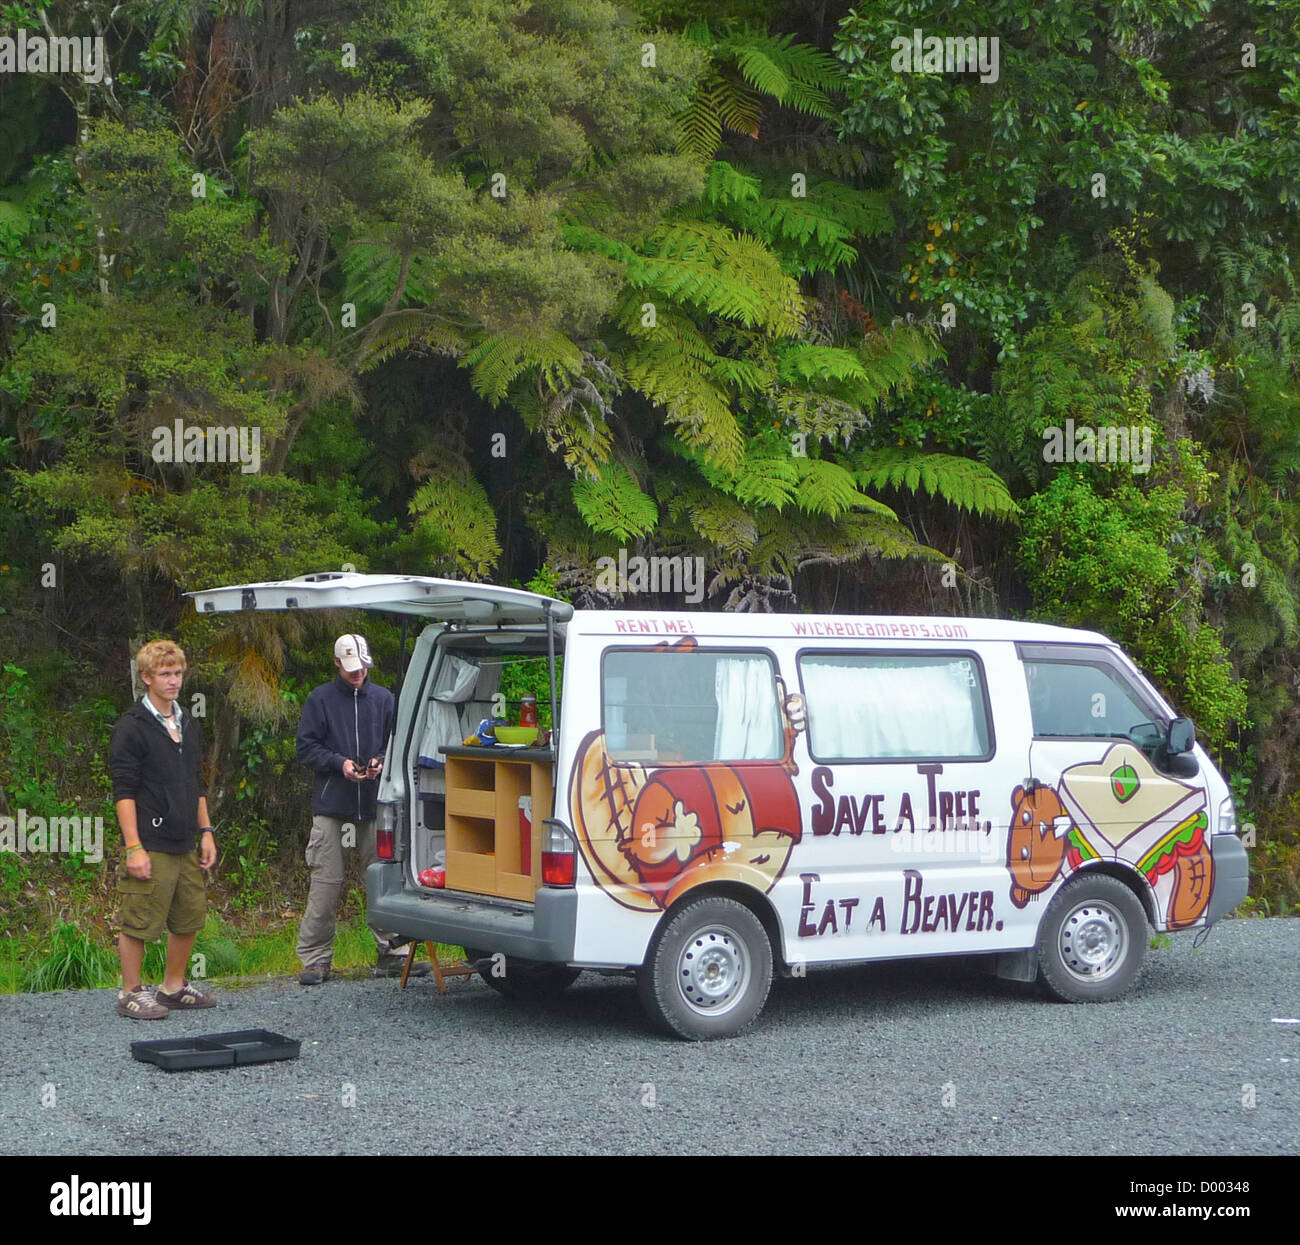 Students gap year travel camper van campervan New Zealand Wicked Campervans  Stock Photo - Alamy